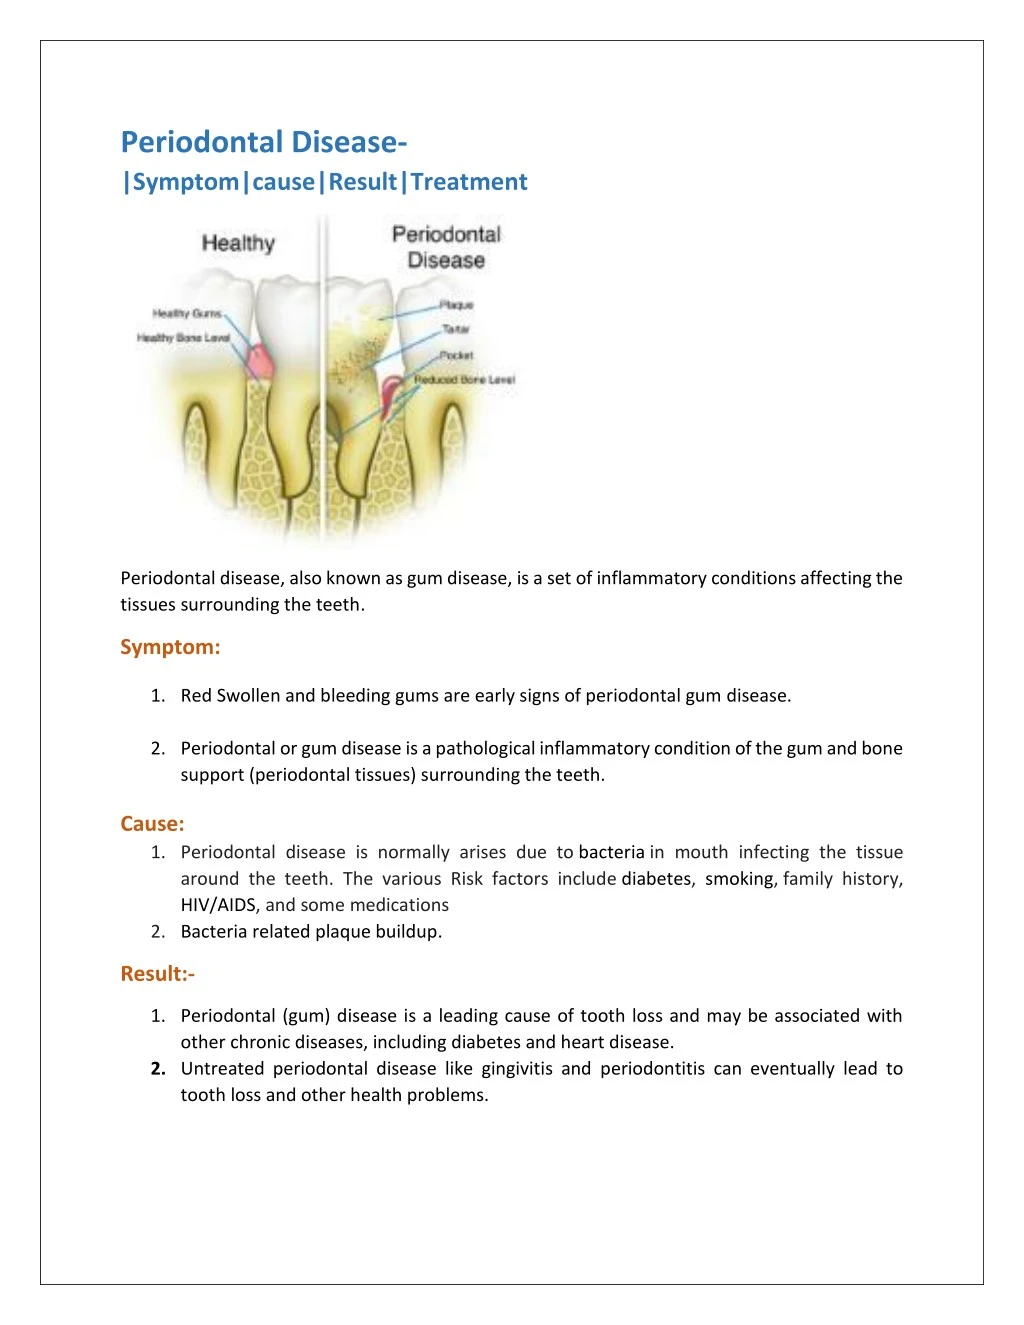 periodontal disease symptom cause result treatment